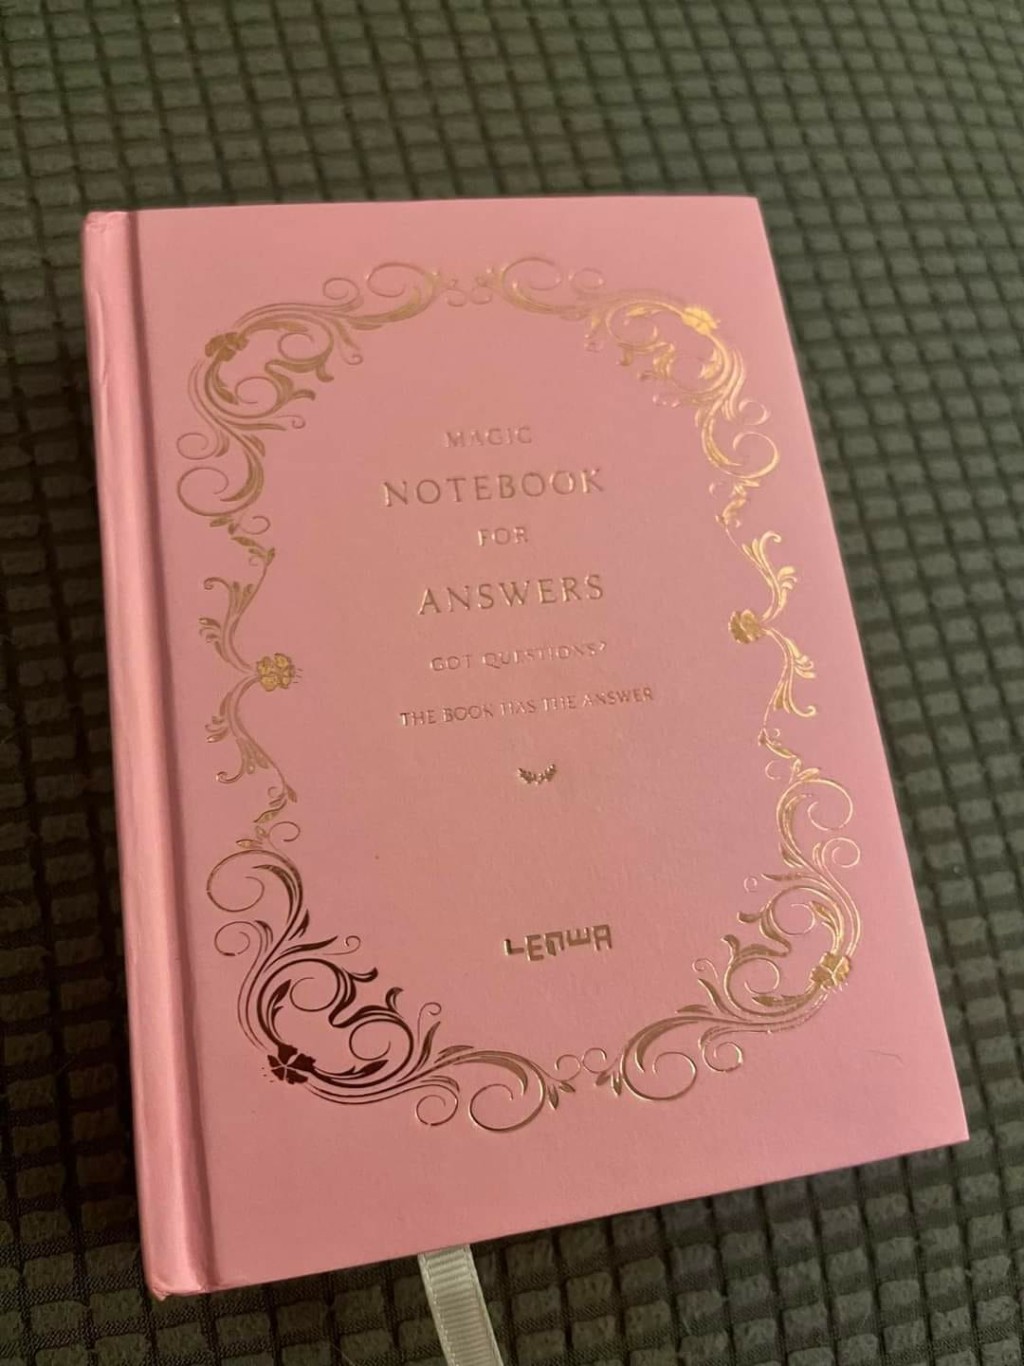 筆記簿上寫有「Magic Notebook For Answers」的字樣。淘寶開心share FB圖片